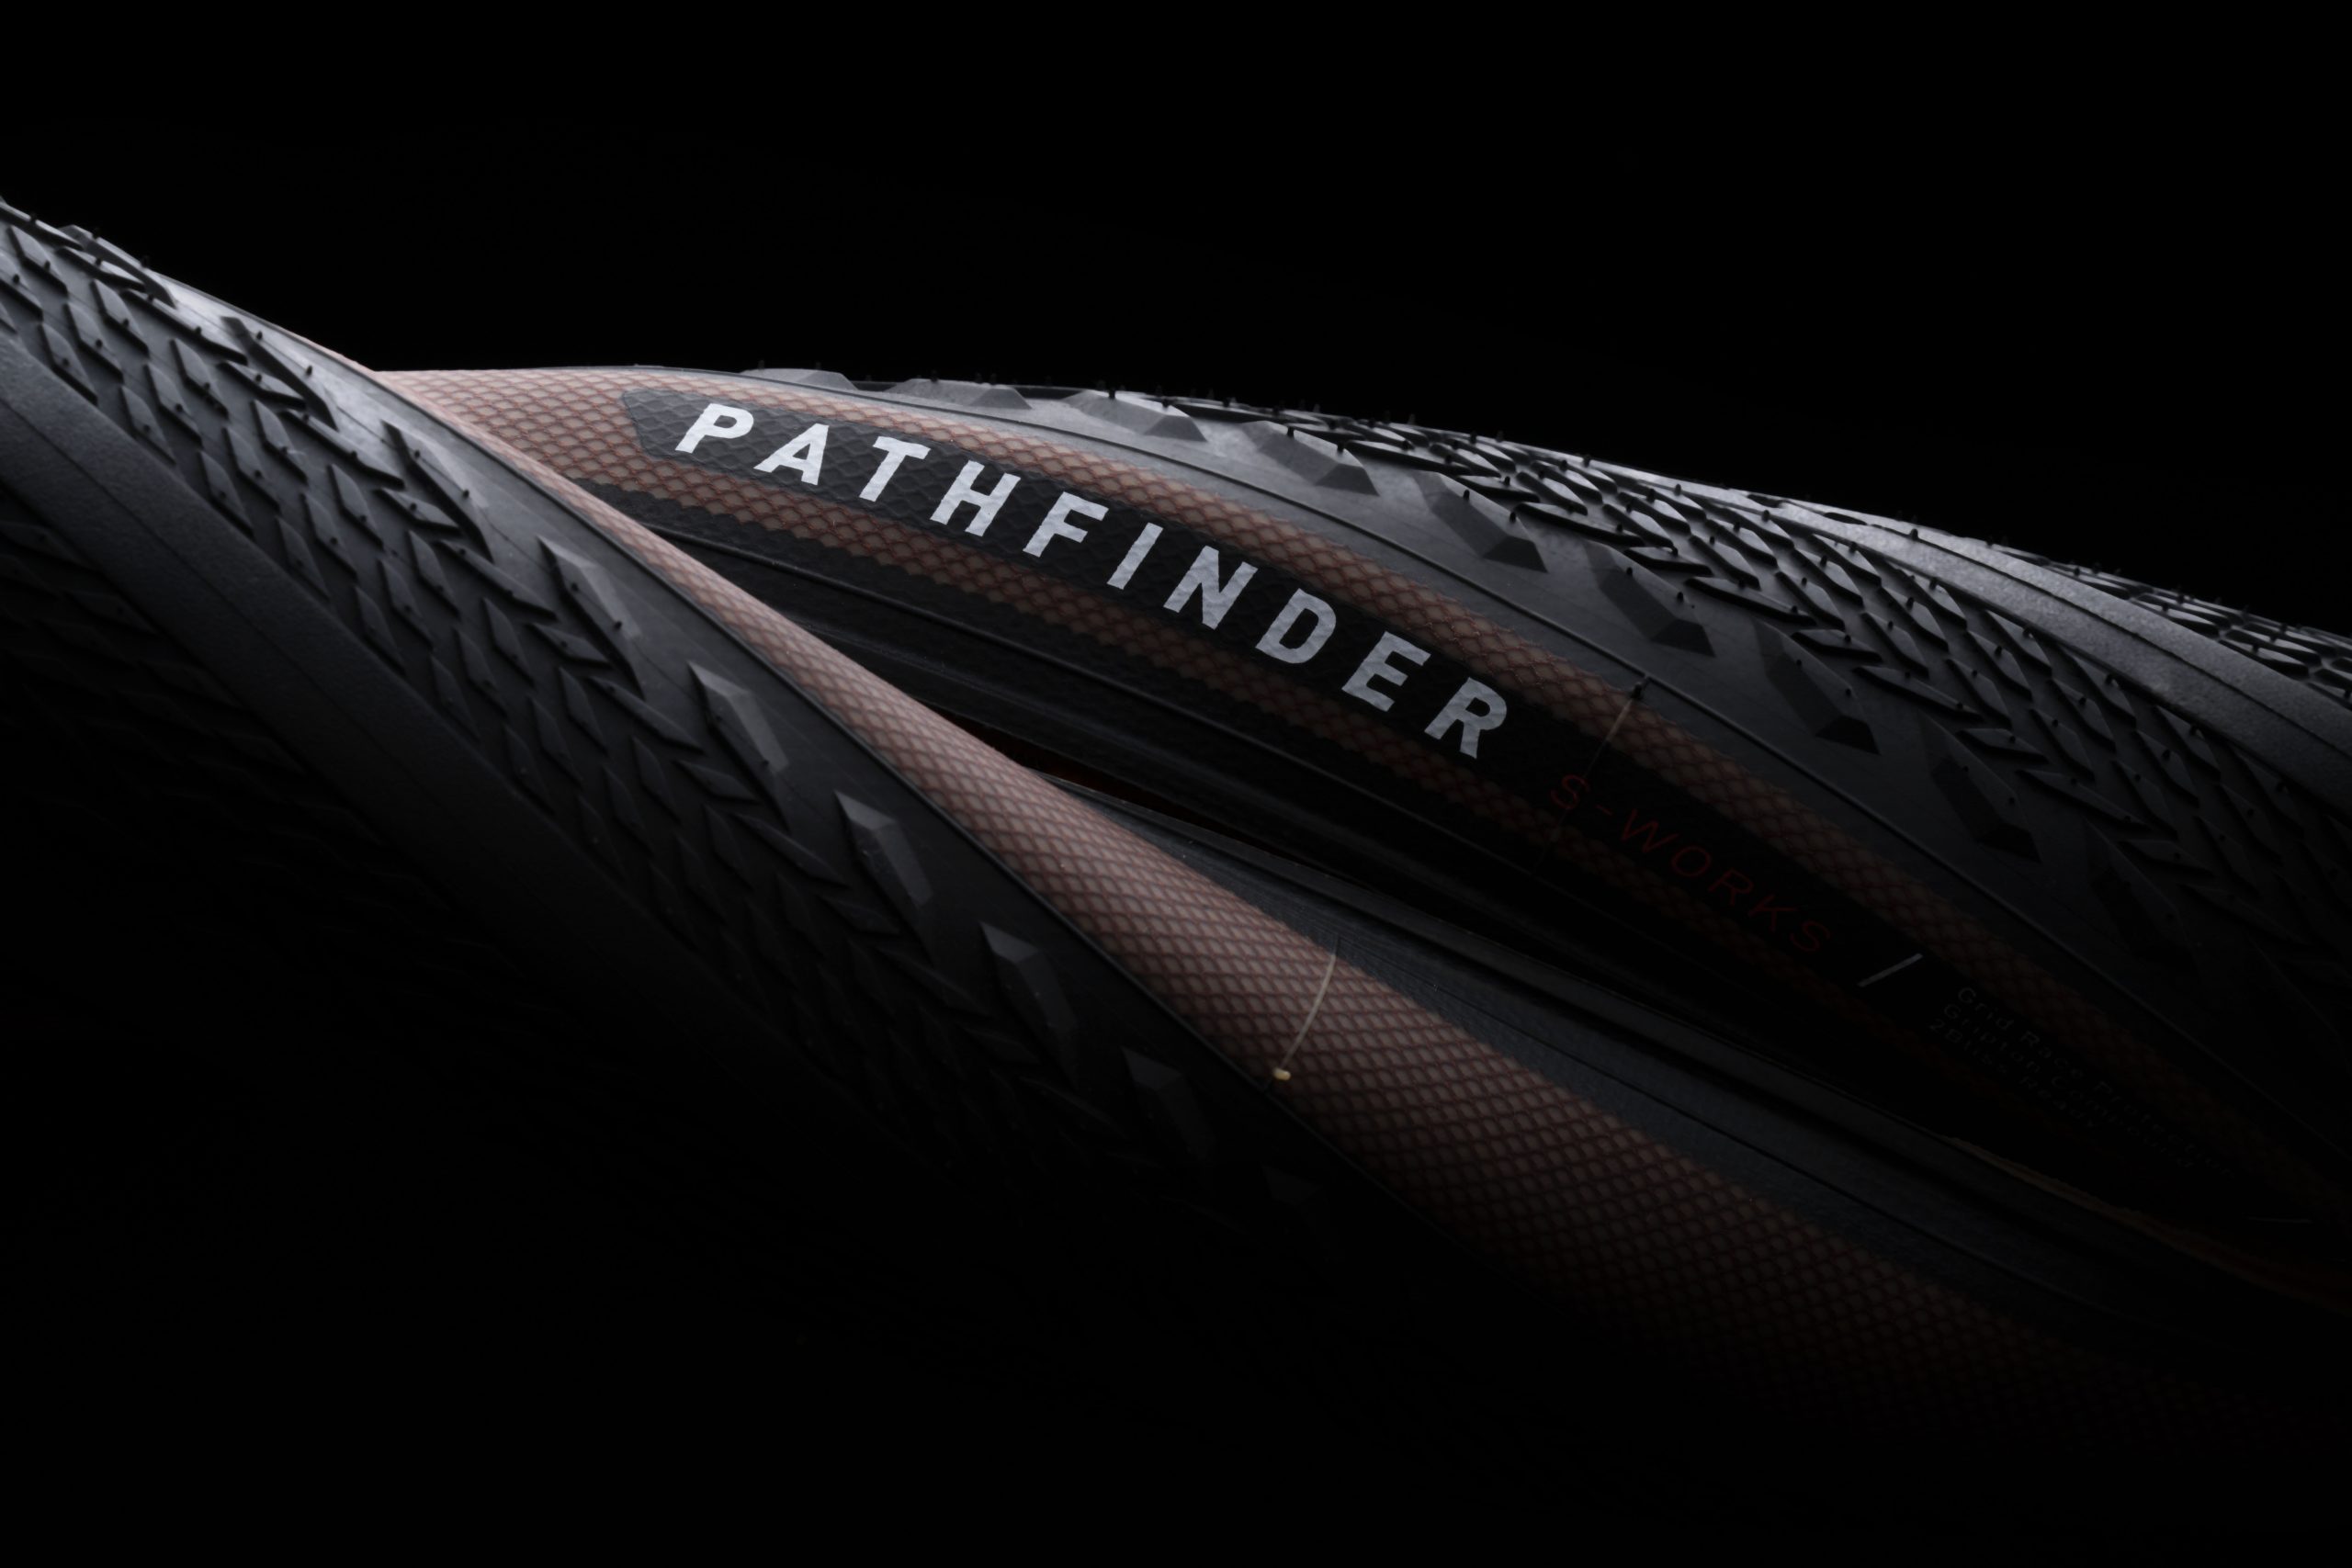 Specialized presenta il nuovo copertone S-Works Pathfinder